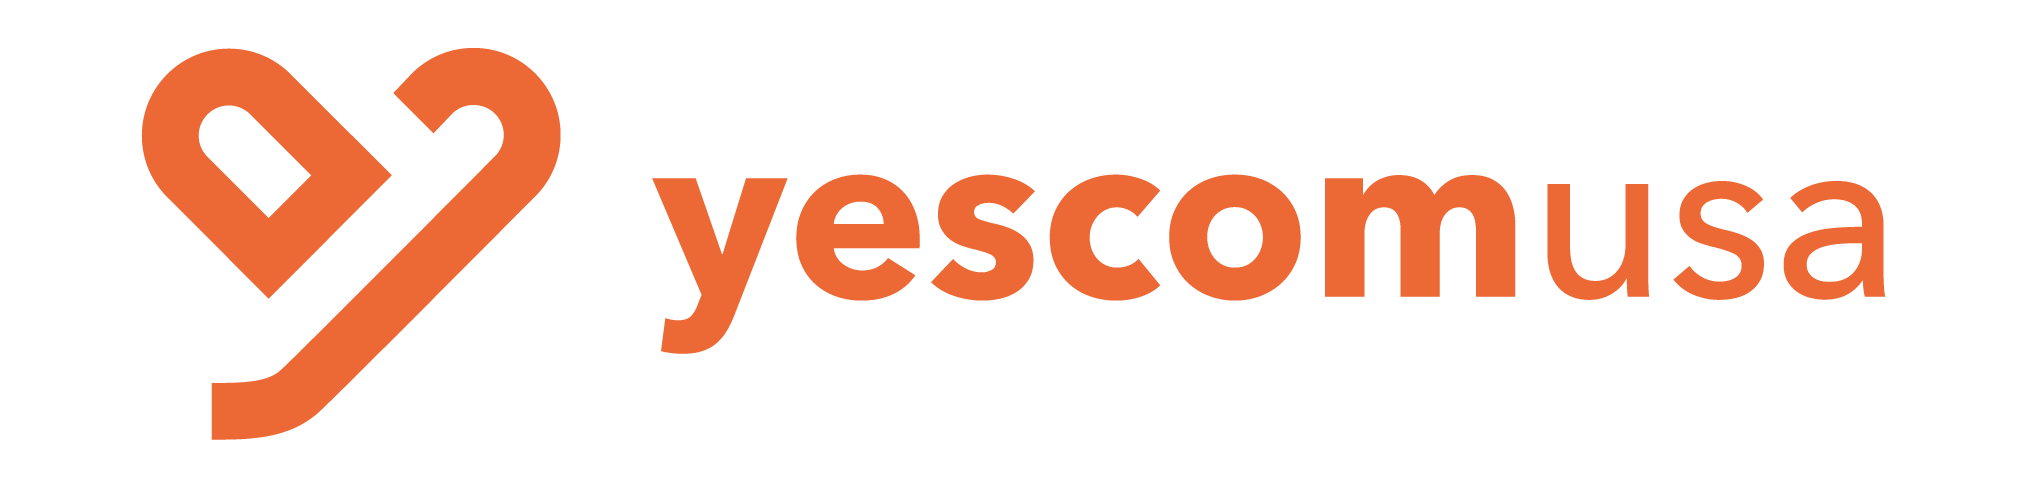 yescom usa logo